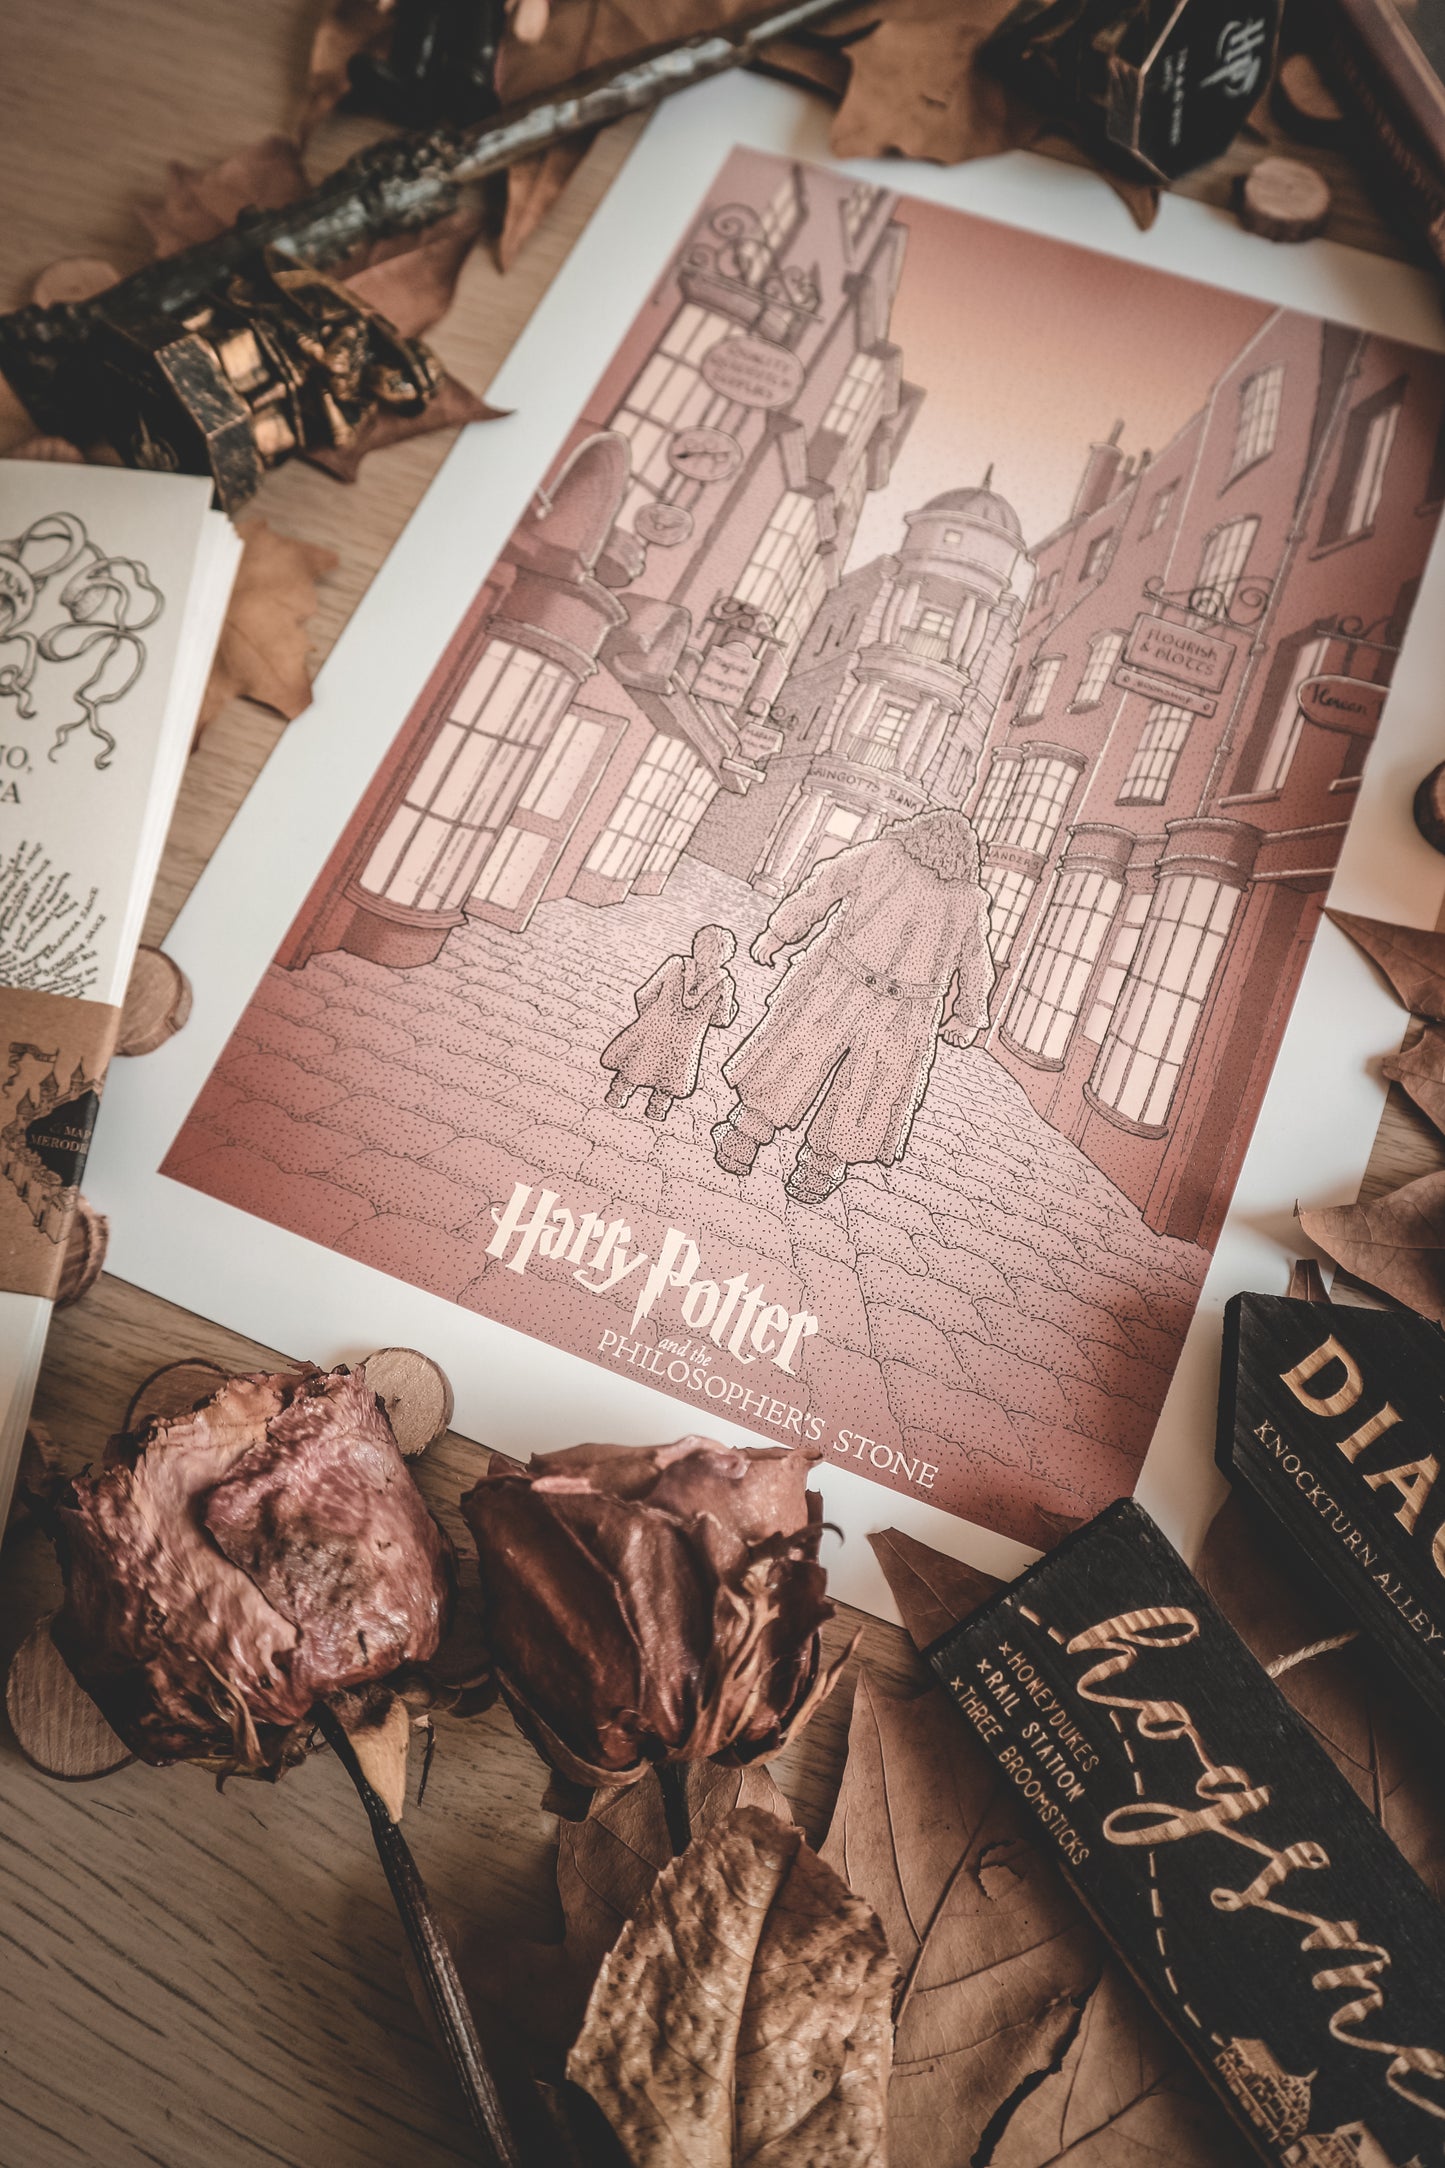 Harry Potter - The Philosopher's Stone